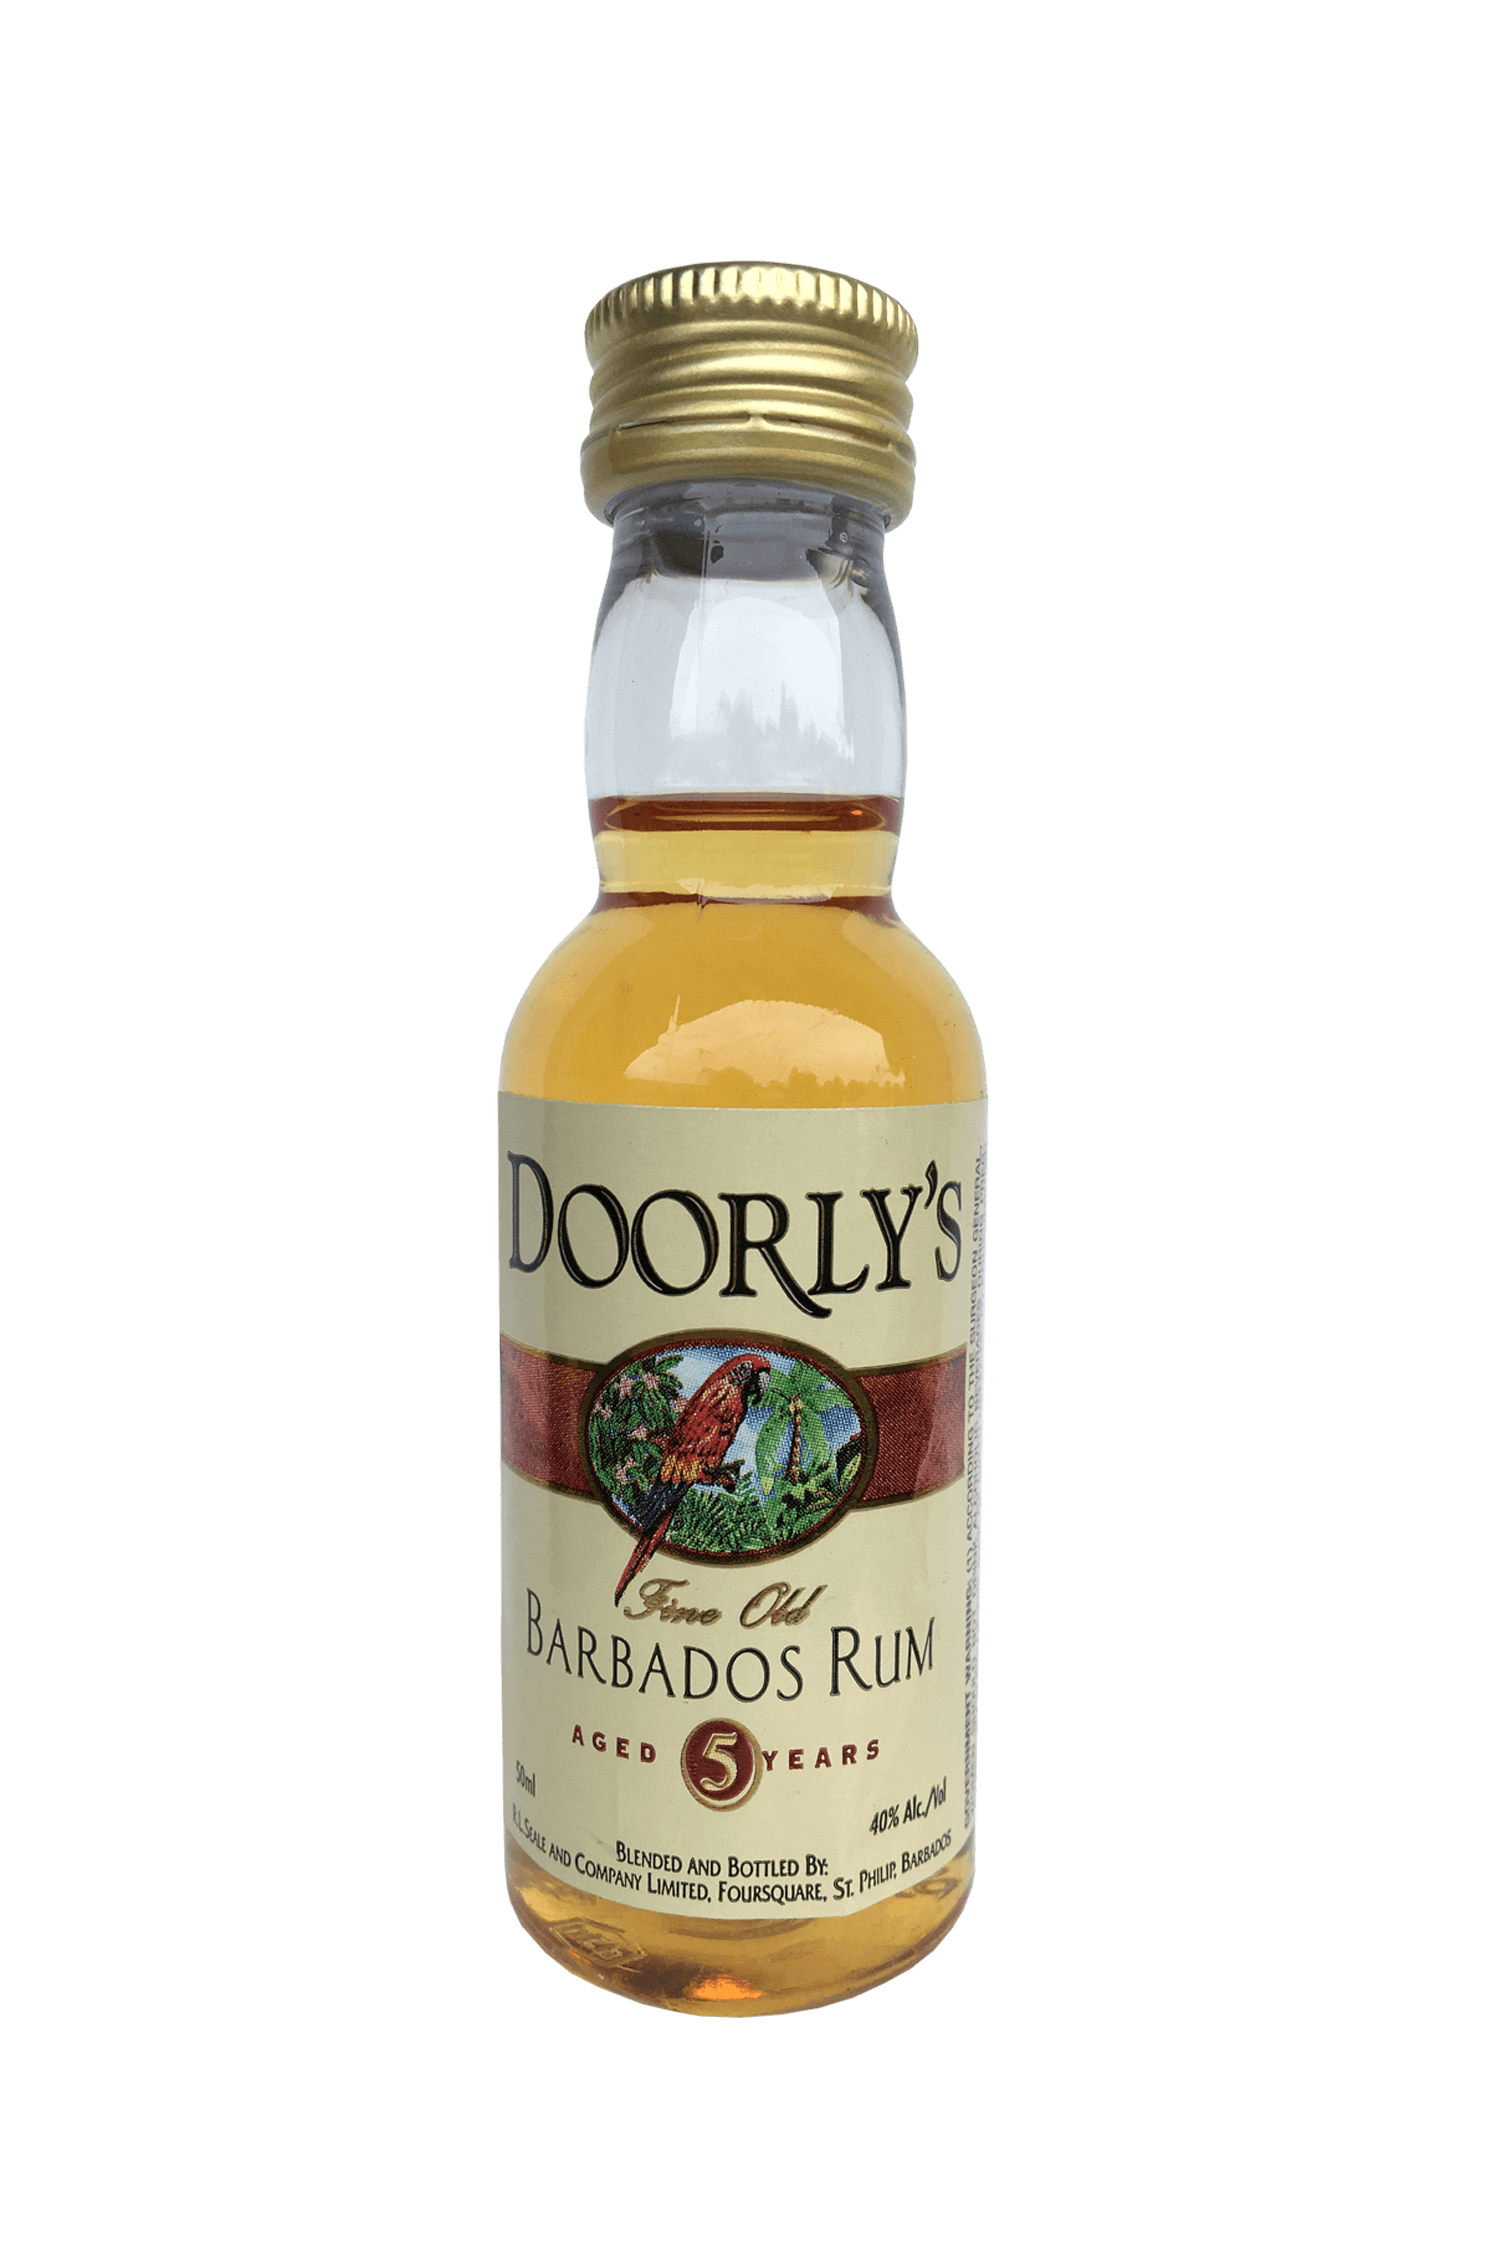 Doorly’s Barbados Rum